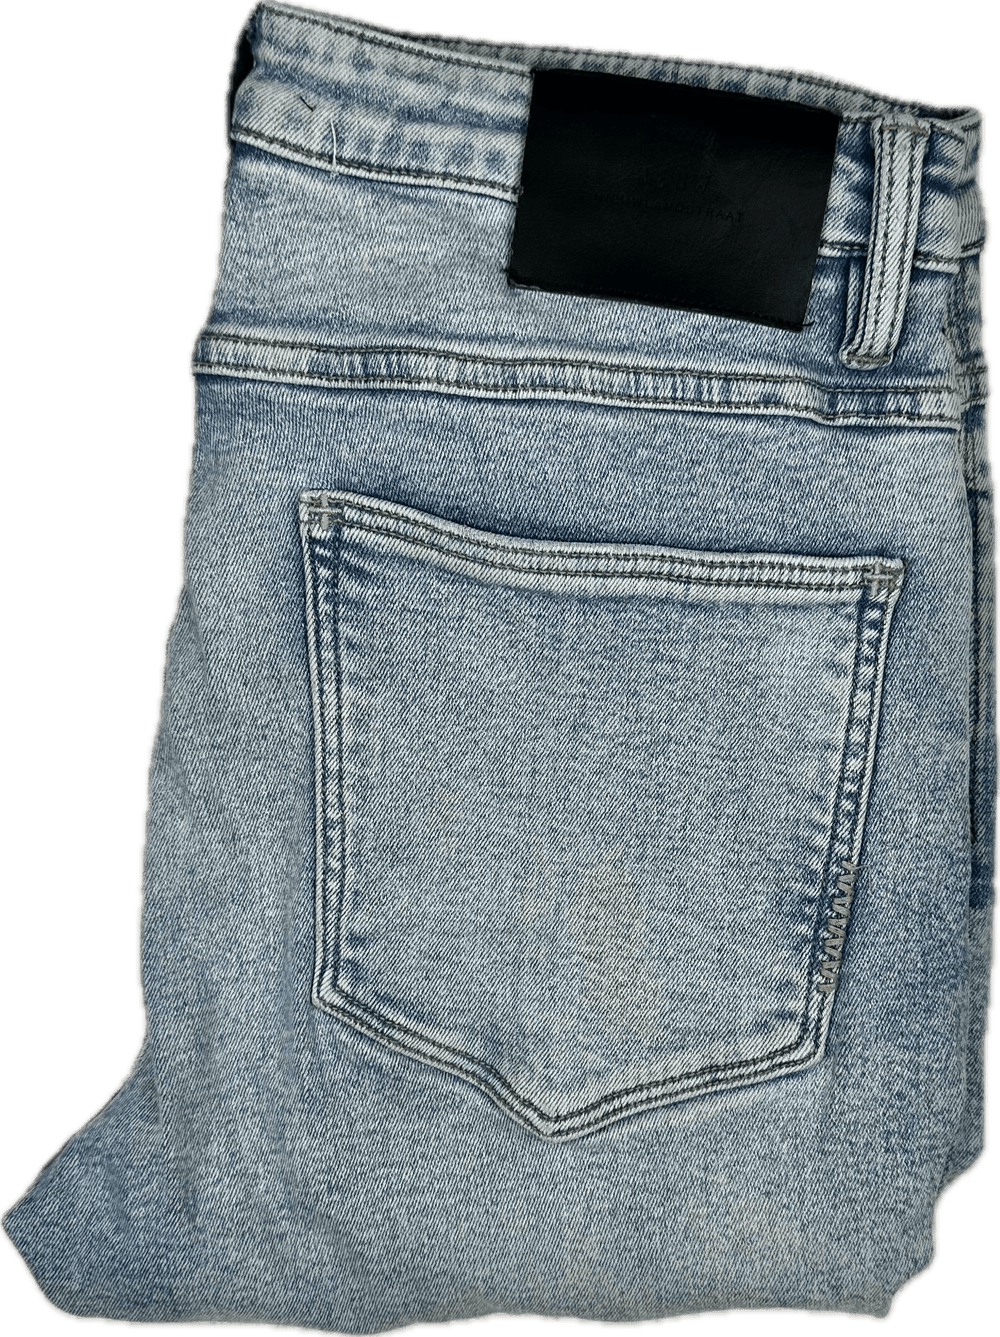 NEUW Mens 'Rebel Skinny' Stretch Jeans - Size 32 - Jean Pool